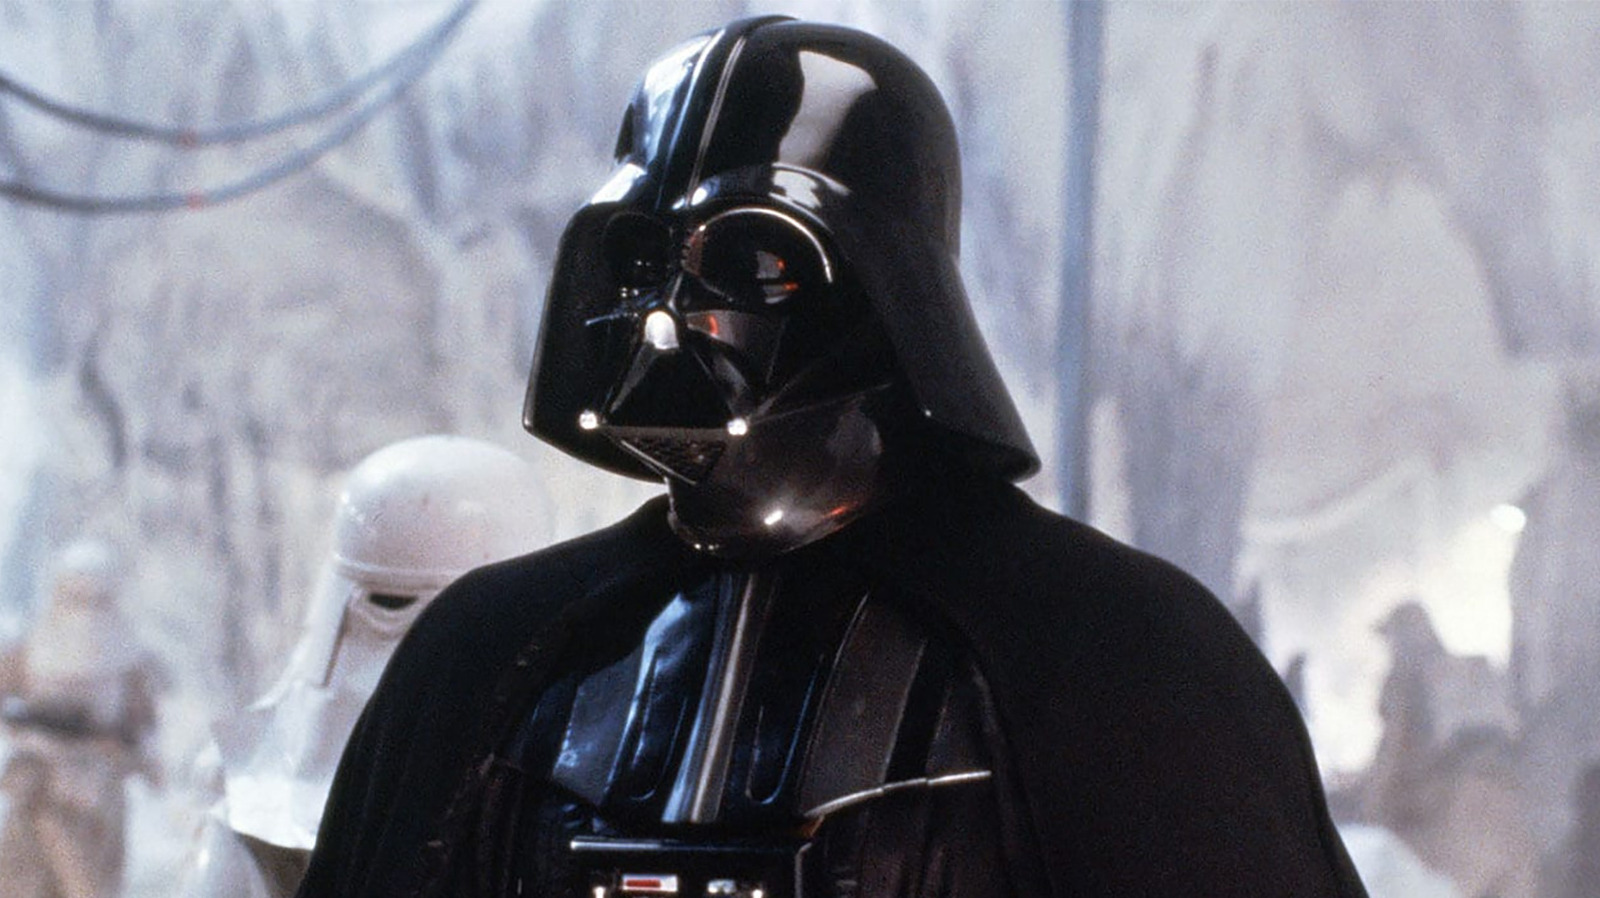 David Prowse Dead: 'Star Wars' Man Behind the Darth Vader Mask Was 85